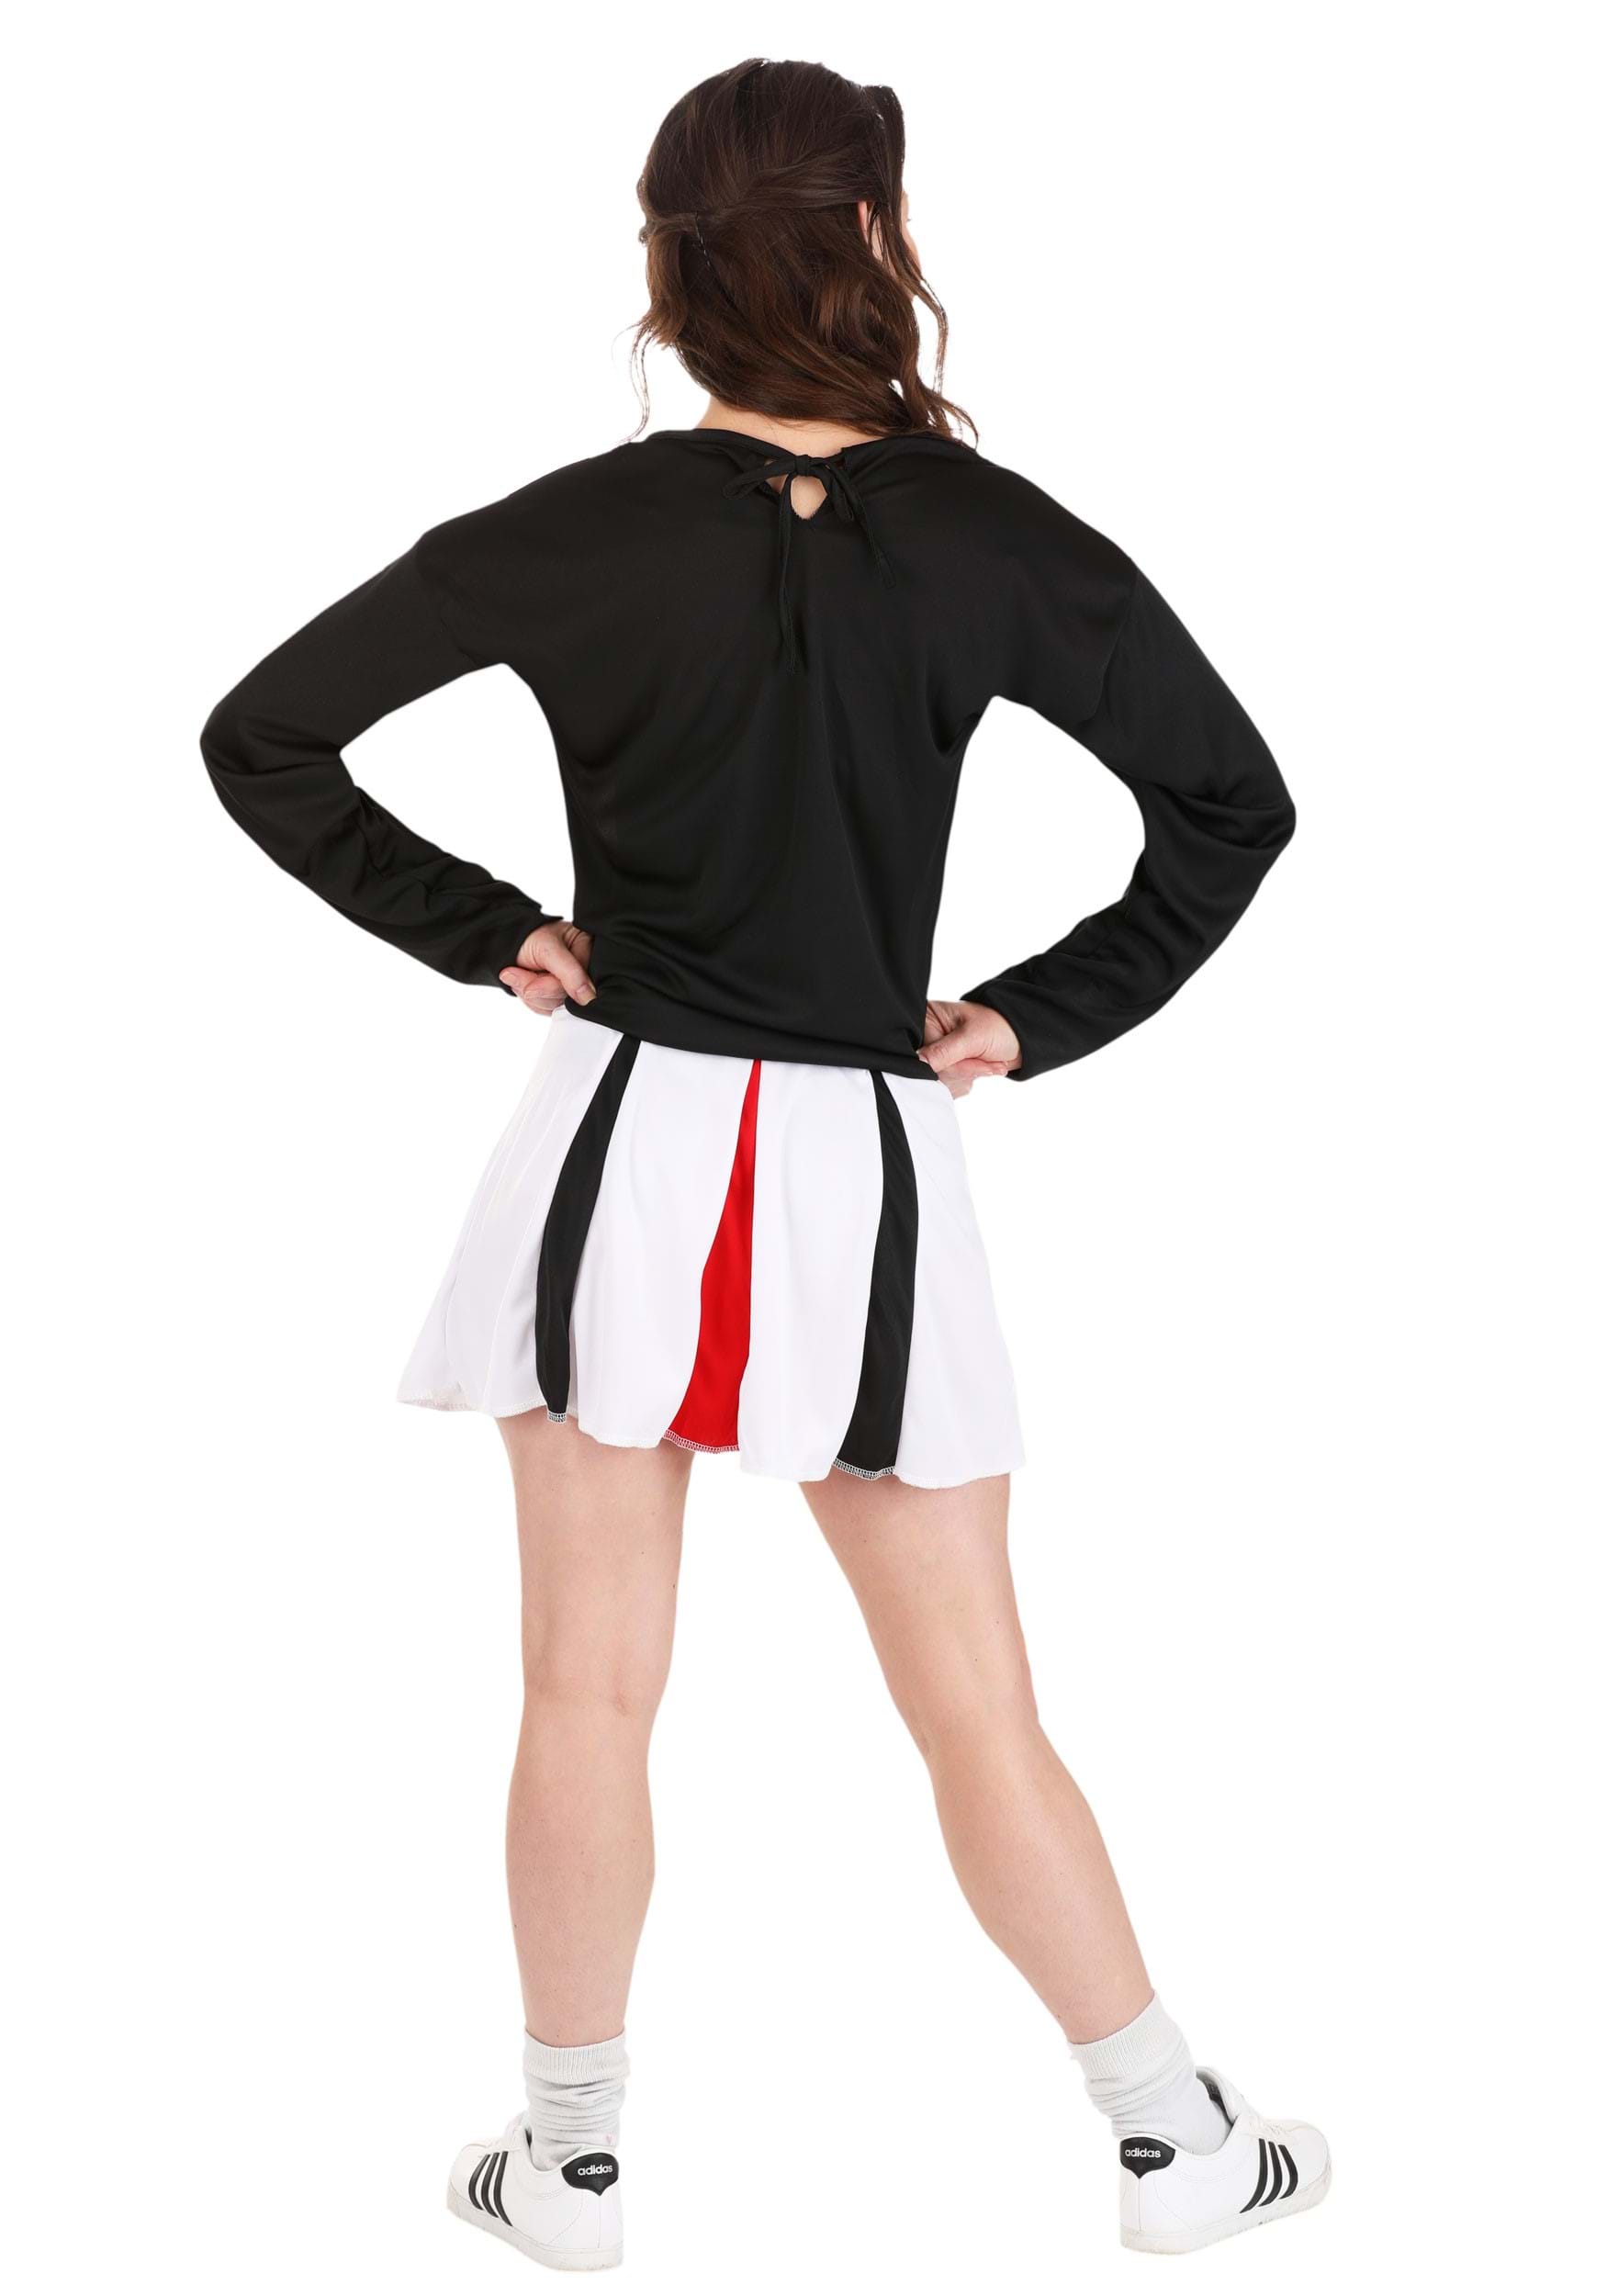 Women's Saturday Night Live Spartan Female Cheerleader Costume